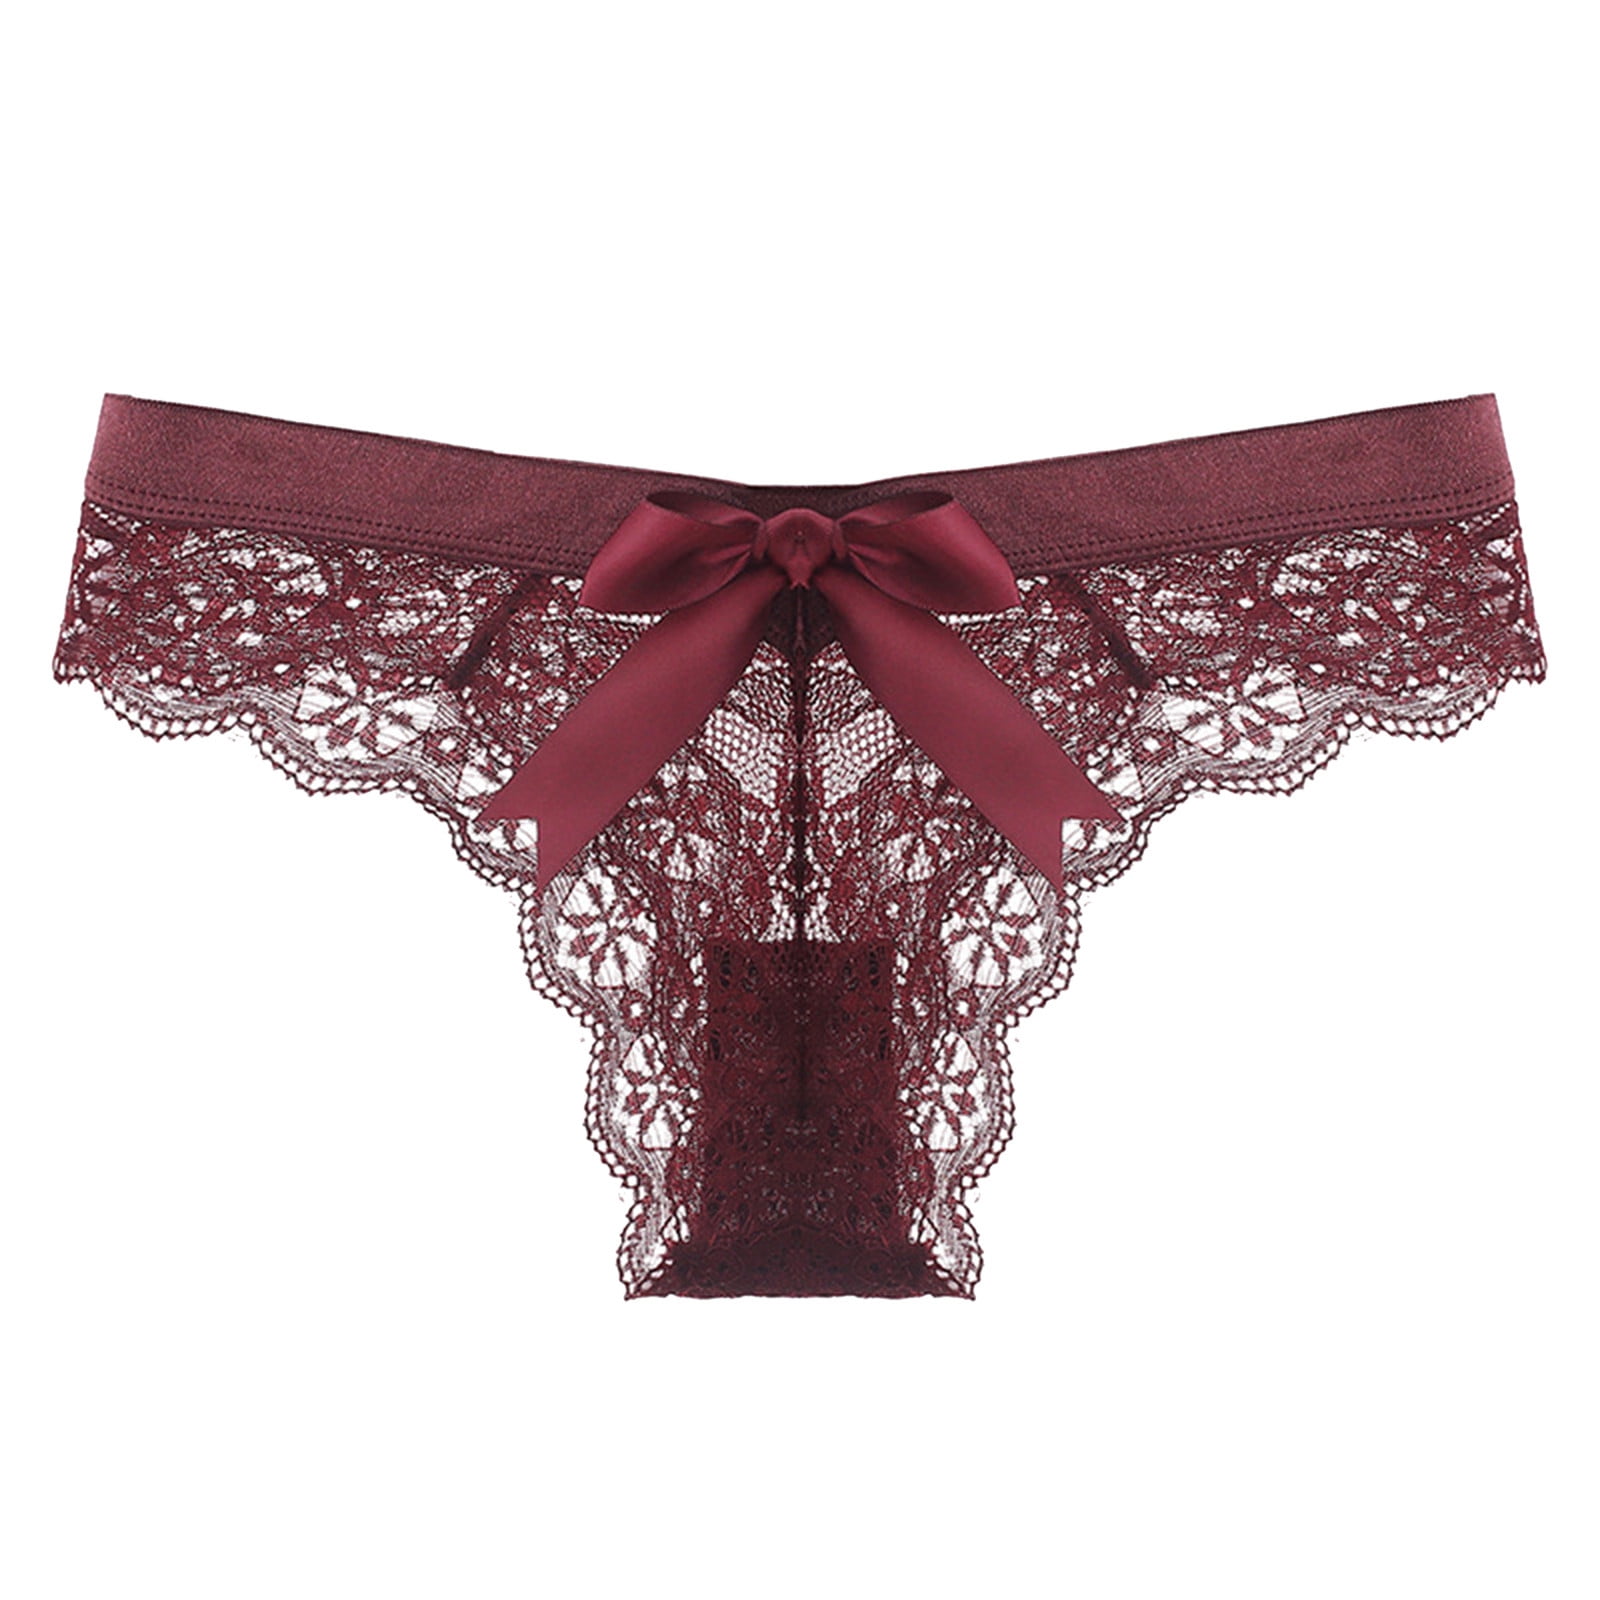 Ladies Hollow Brief Women Floral Lace Panties Underwear Seamless Lady Panty